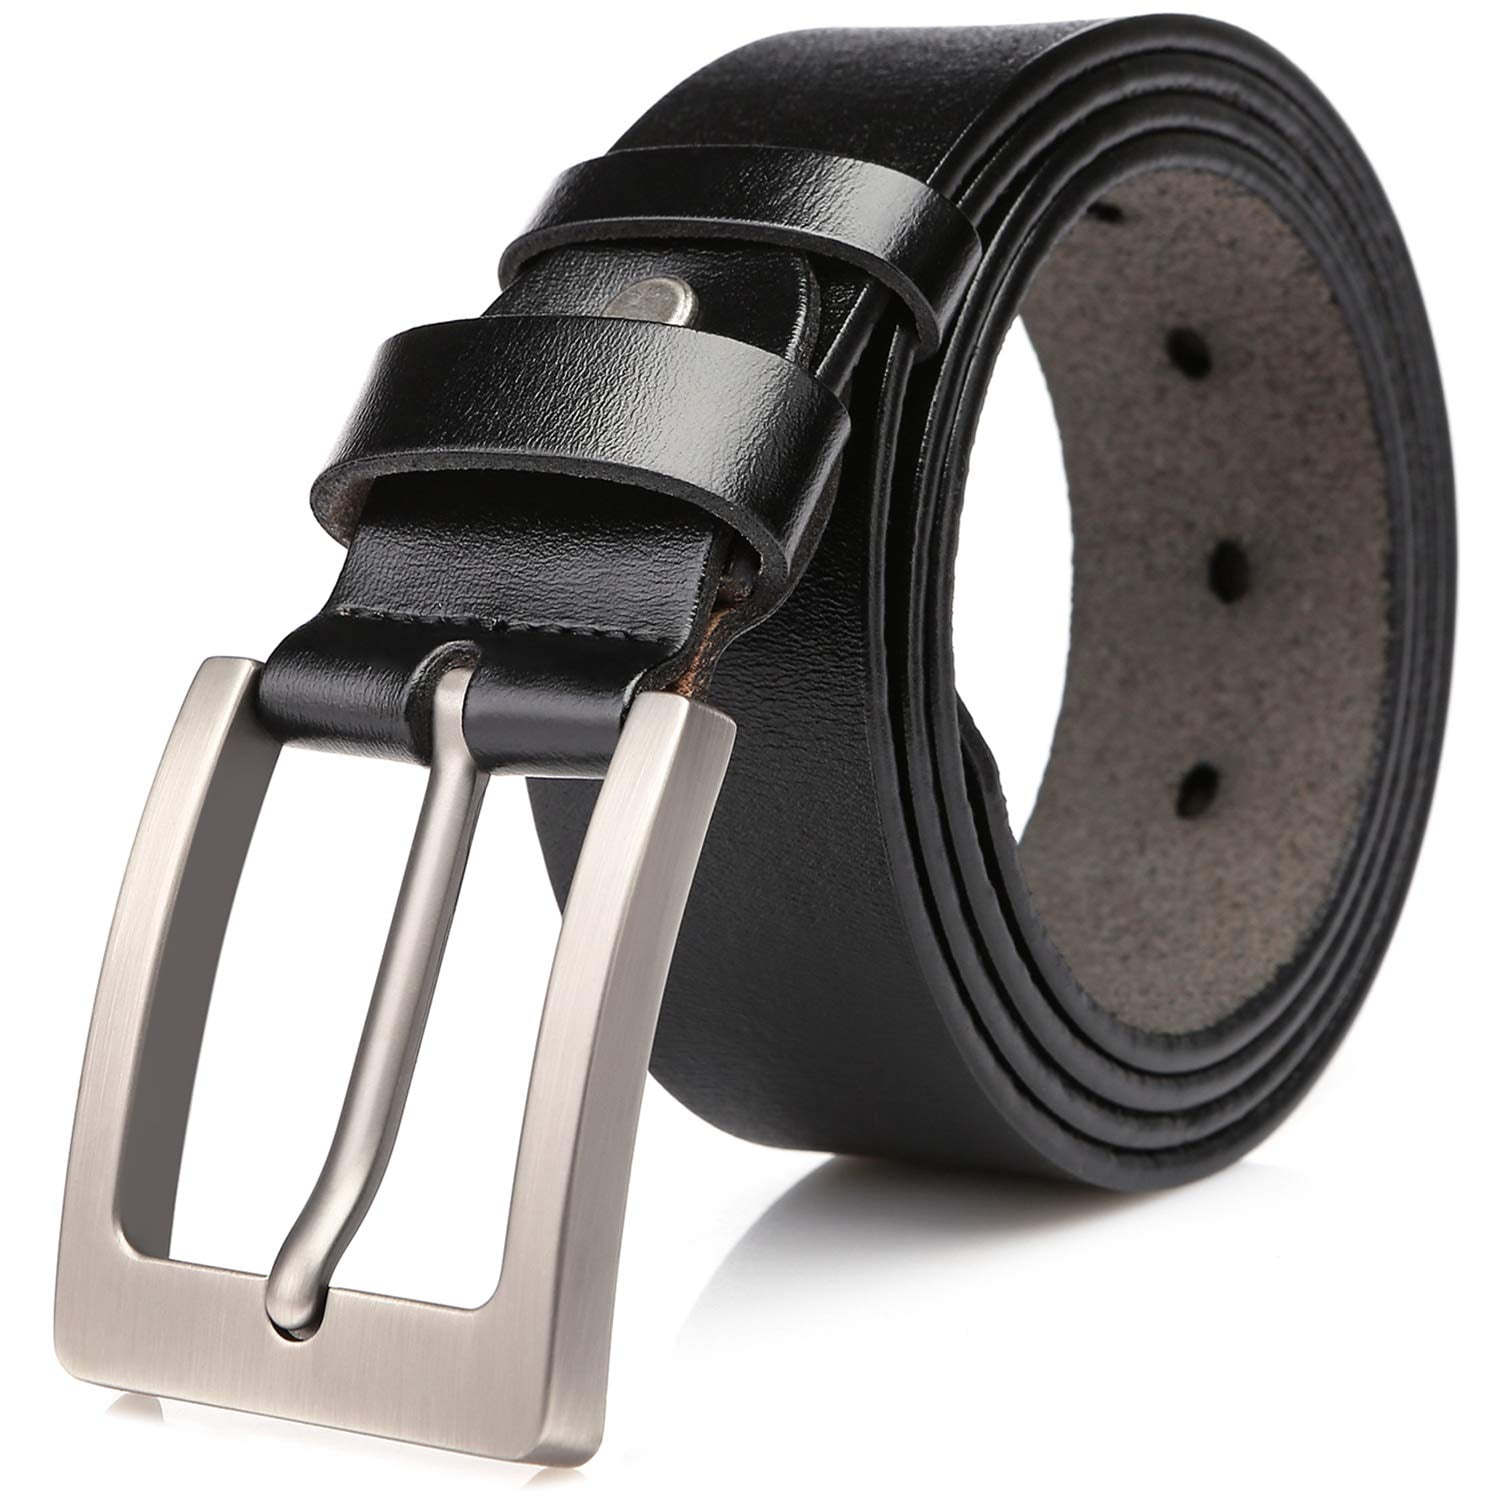 Habitaen Leather Belt For Men Without Buckle Waist Band Slide Automatic Lock 